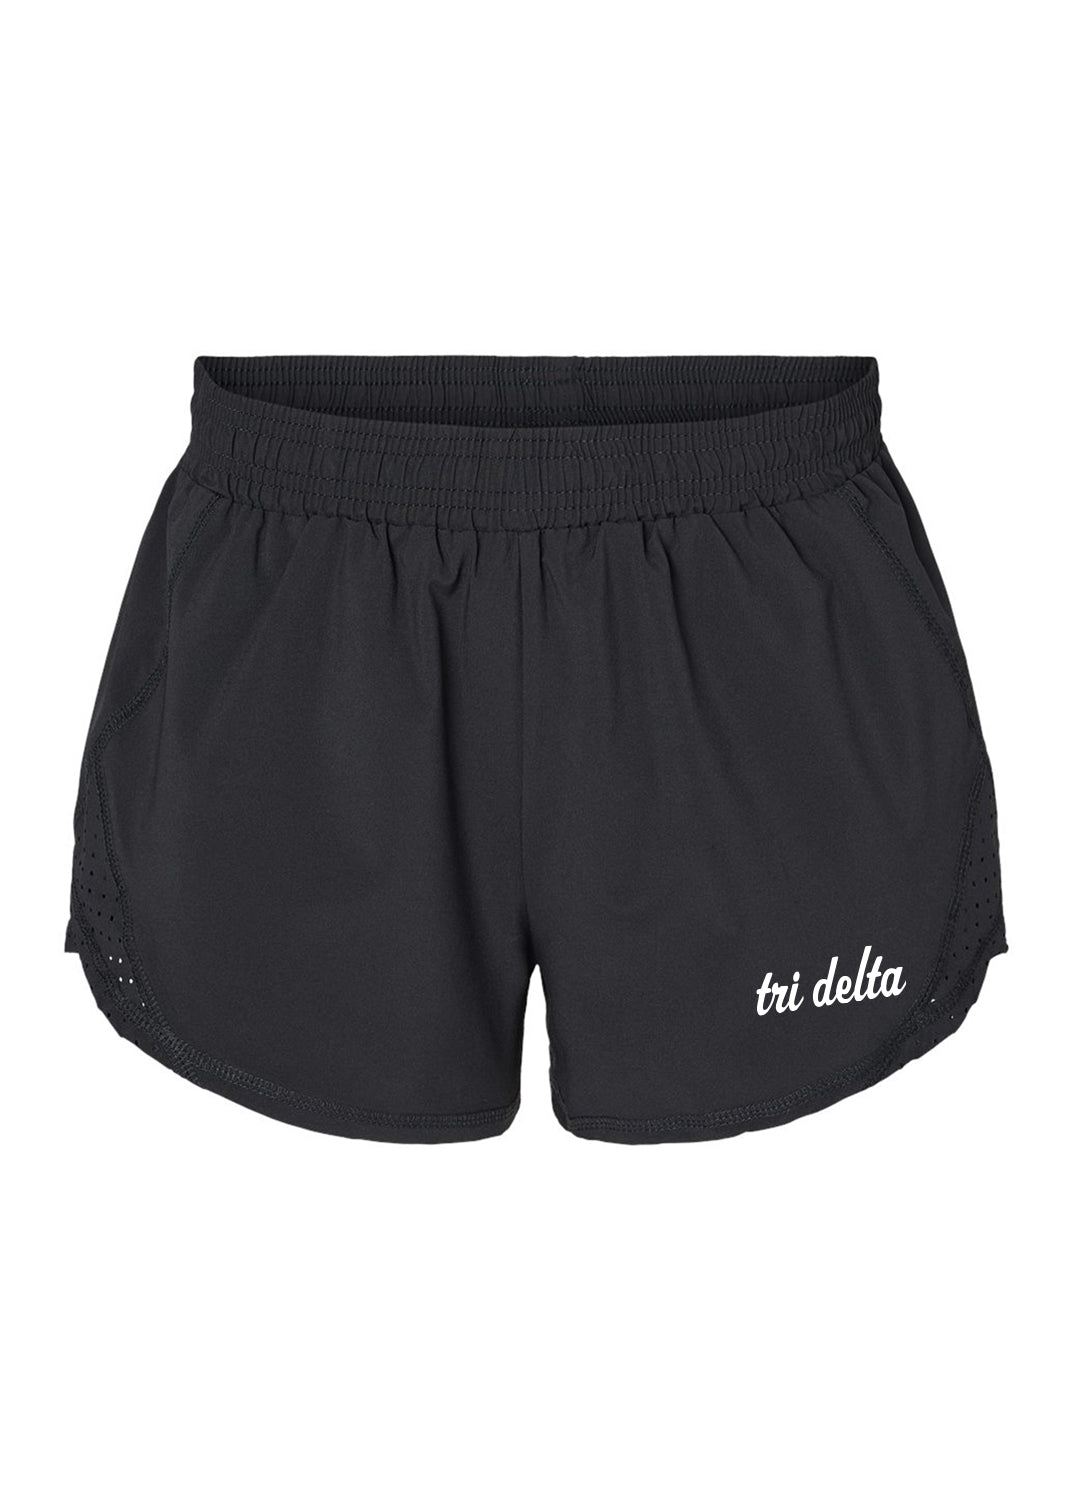 Tri Delta Black Athletic Shorts